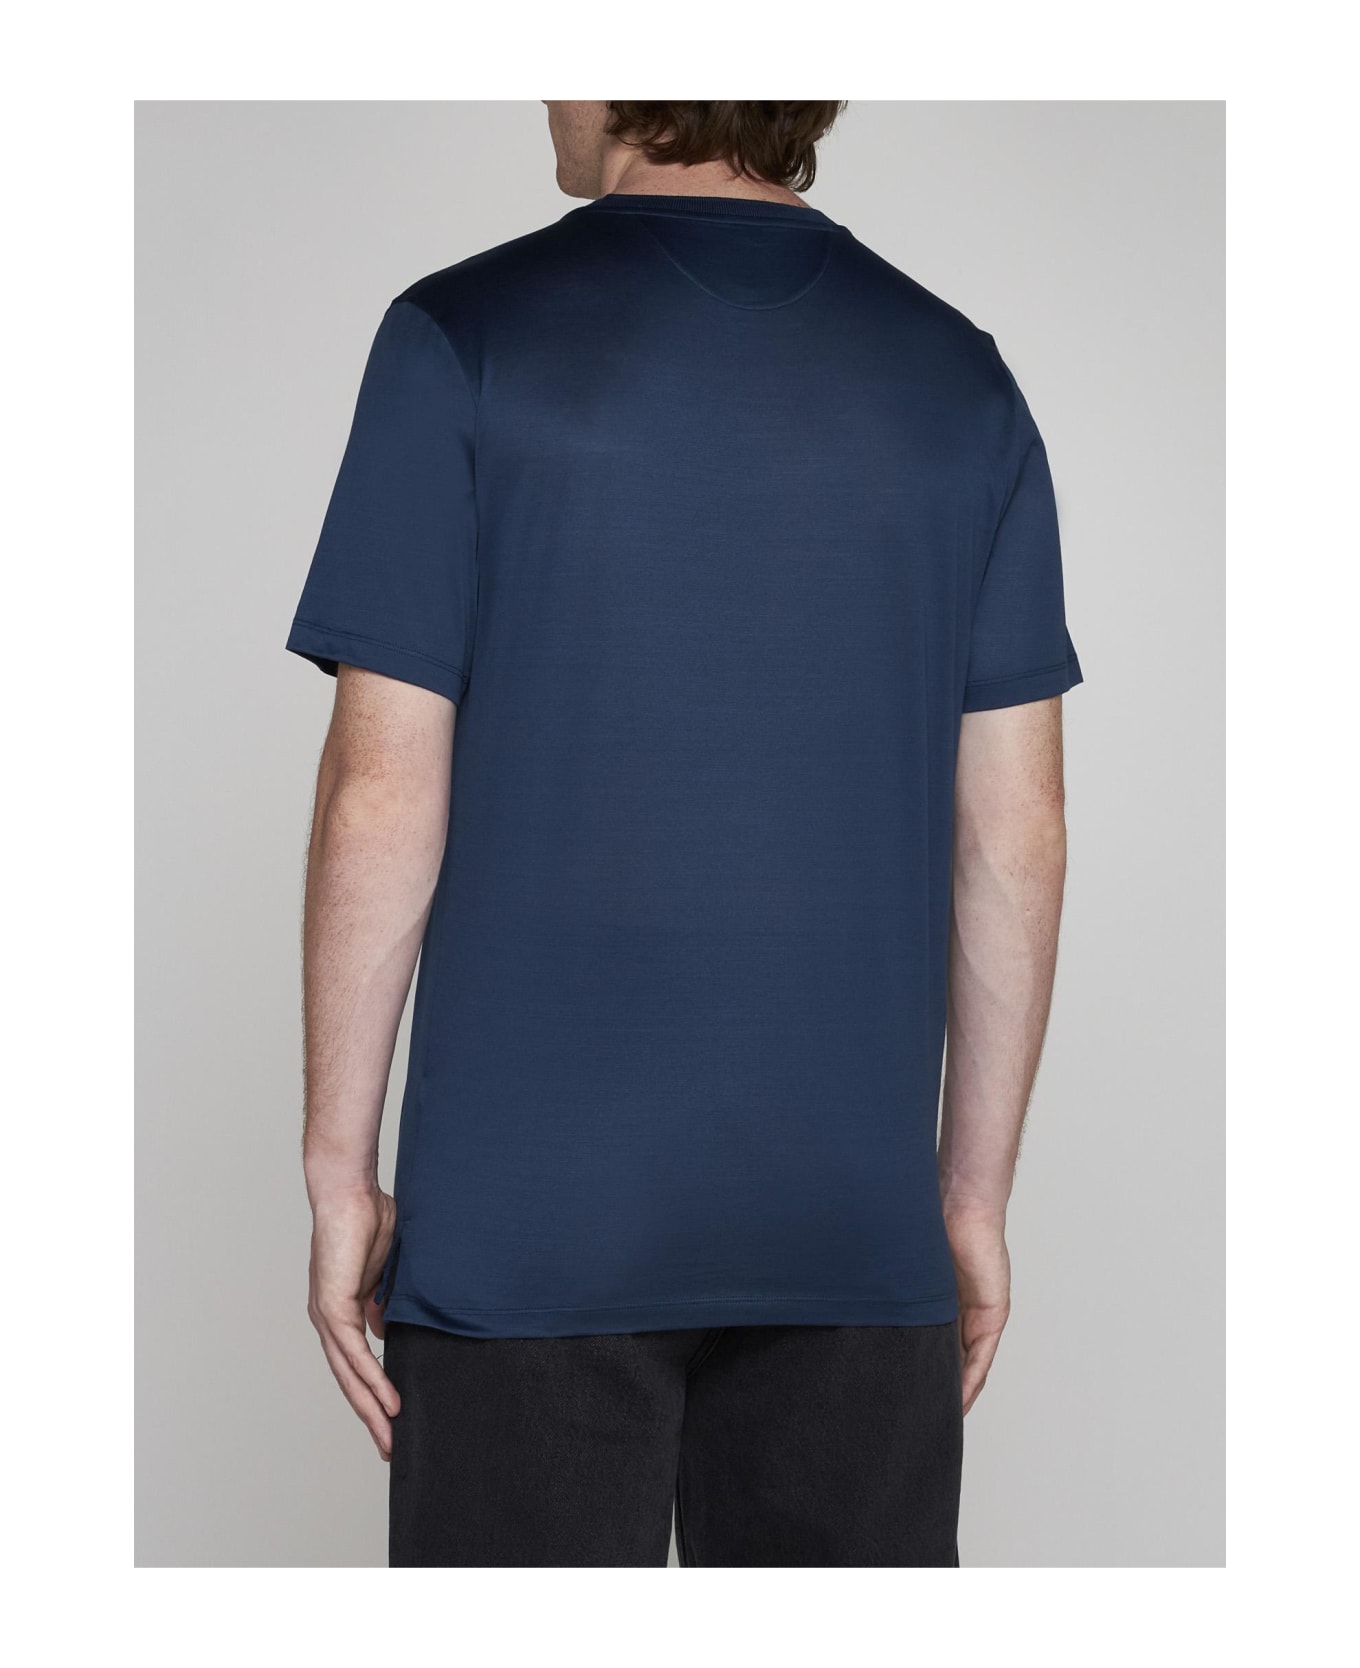 Paul Smith Striped Pocket Cotton T-shirt - NAVY シャツ